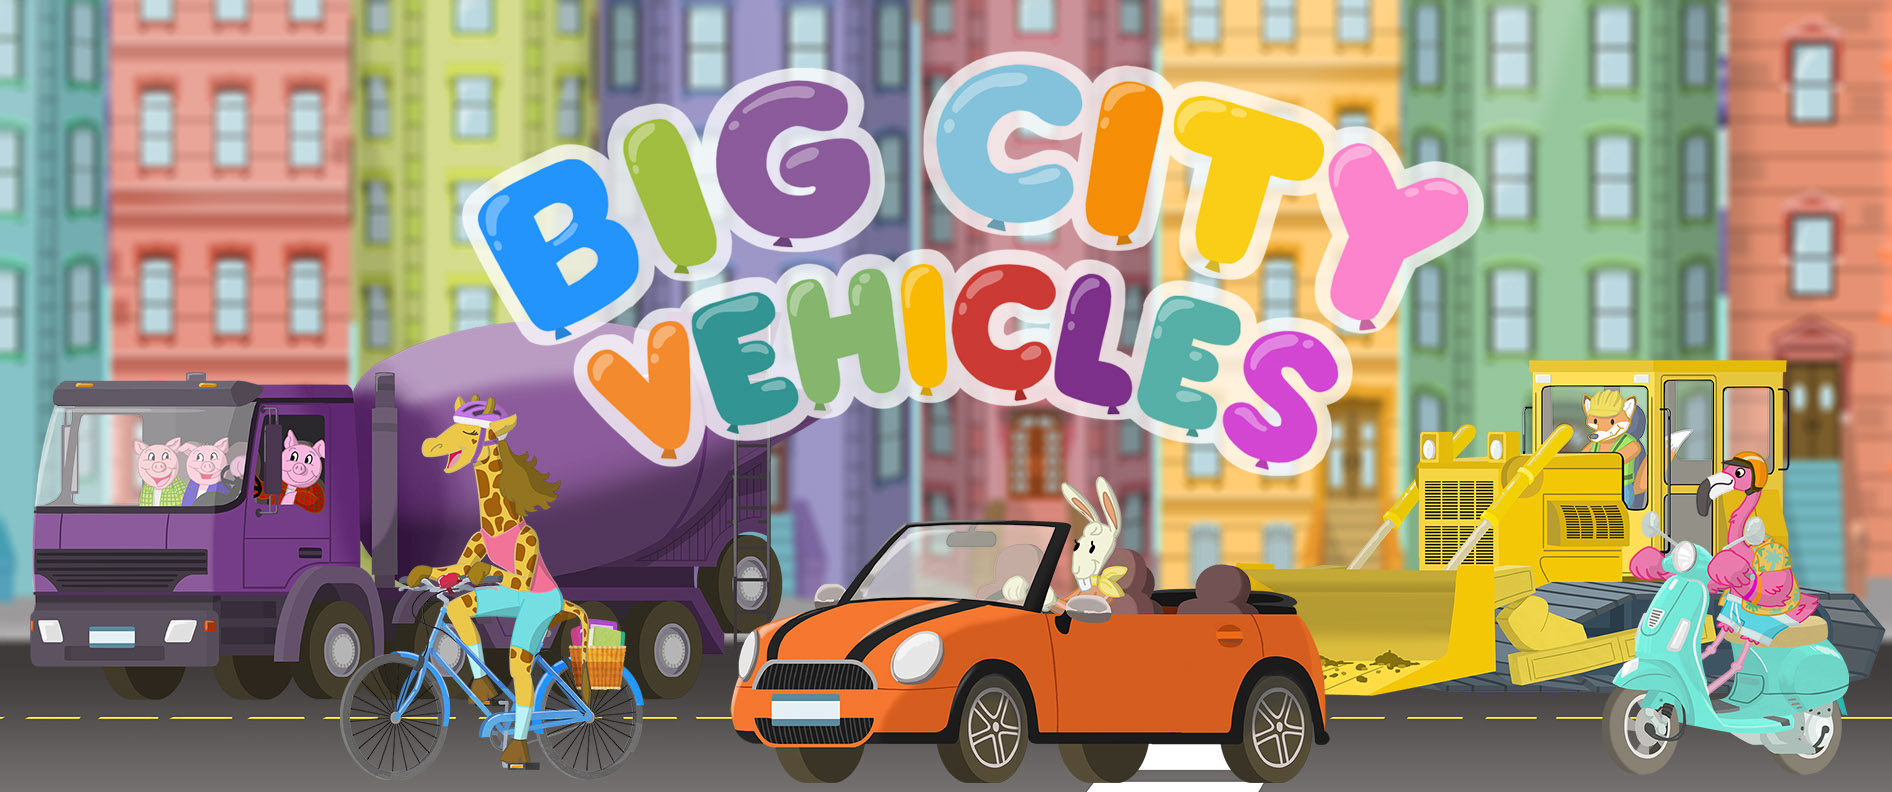 Big City Vehicles